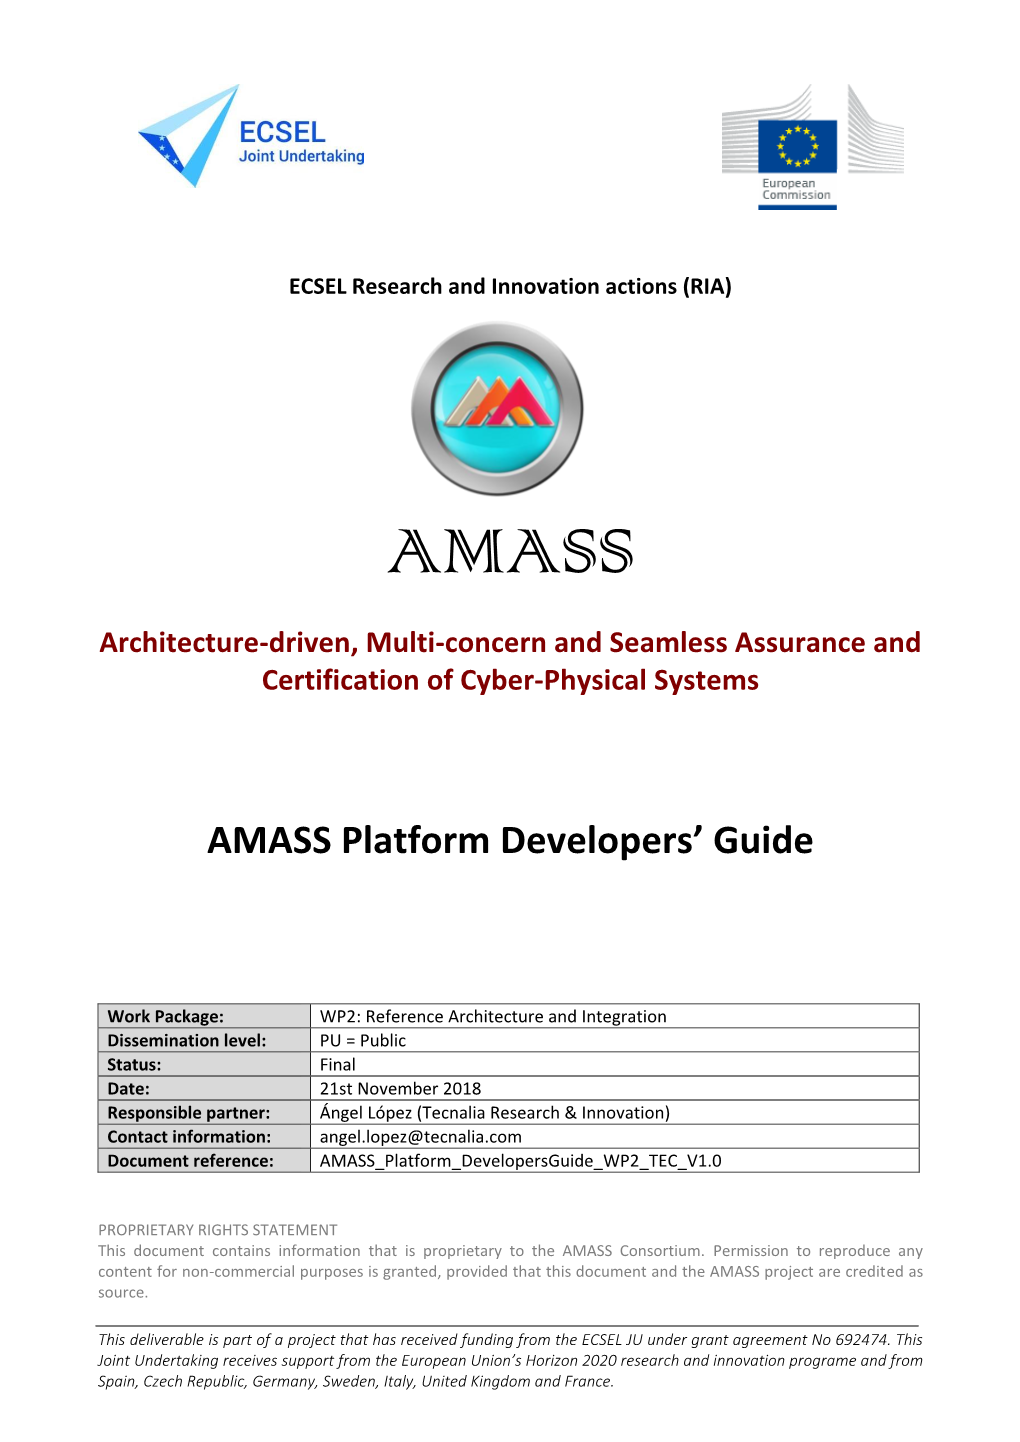 AMASS Platform Developers' Guide